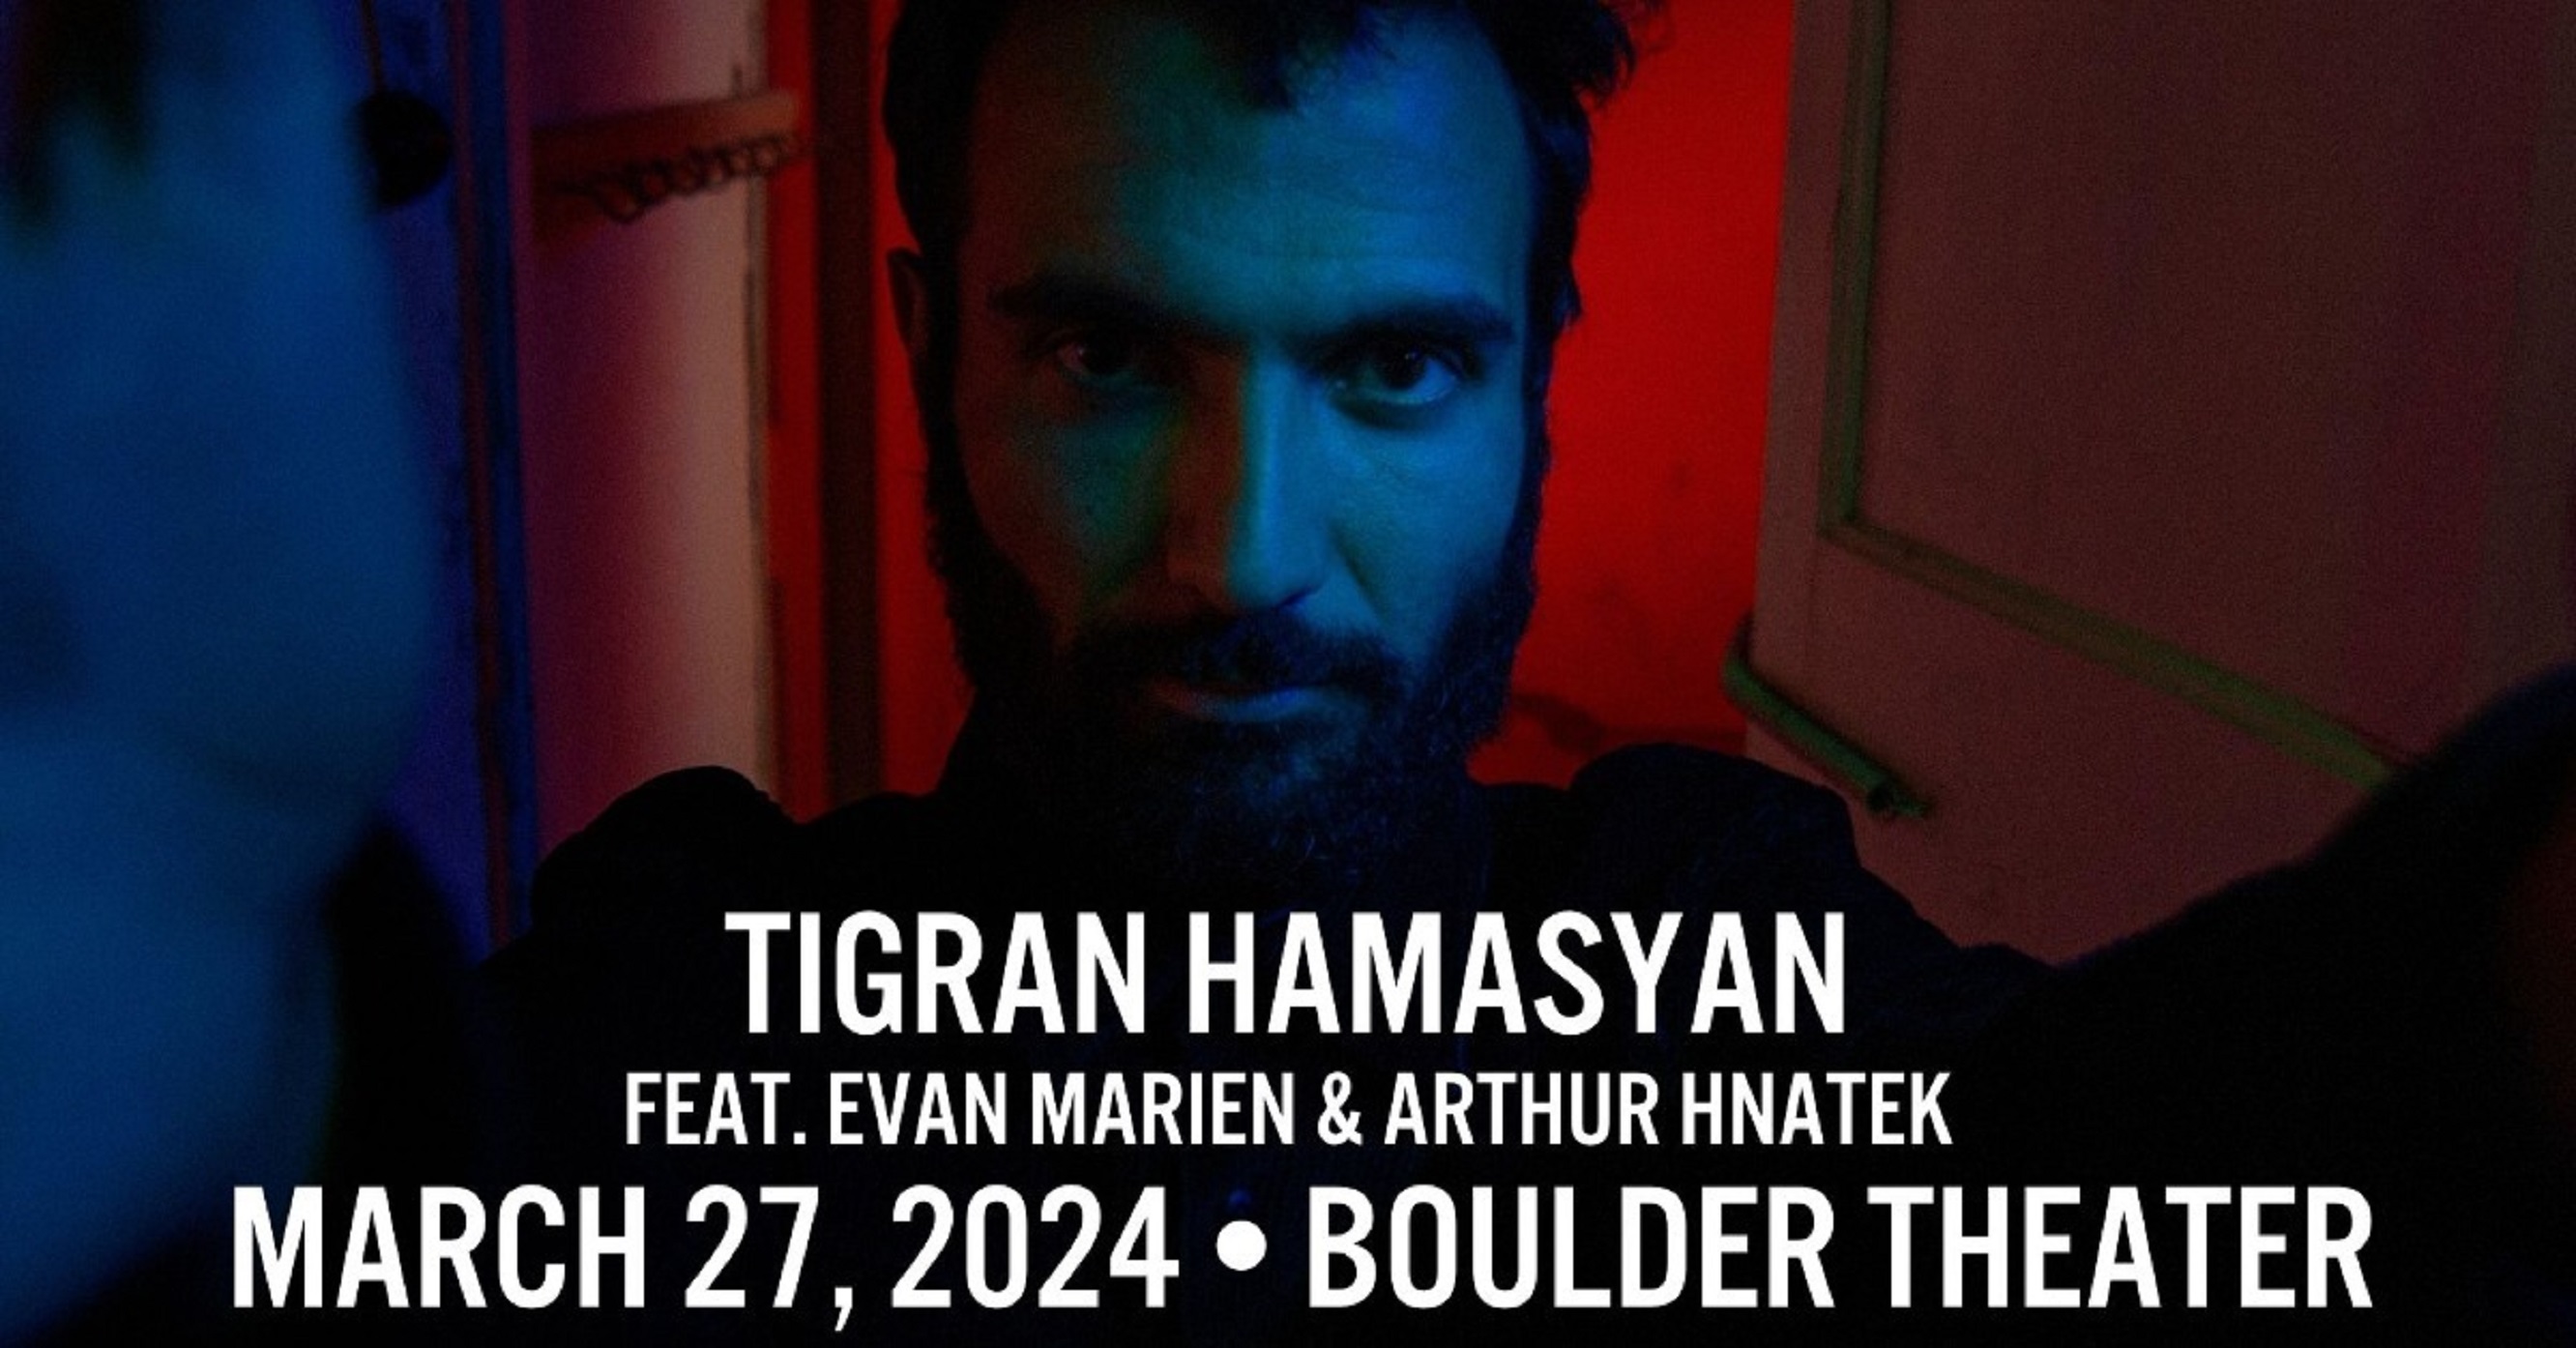 Boulder Theater Presents Tigran Hamasyan feat. Evan Marien, Arthur Hnatek | 3/27/2024